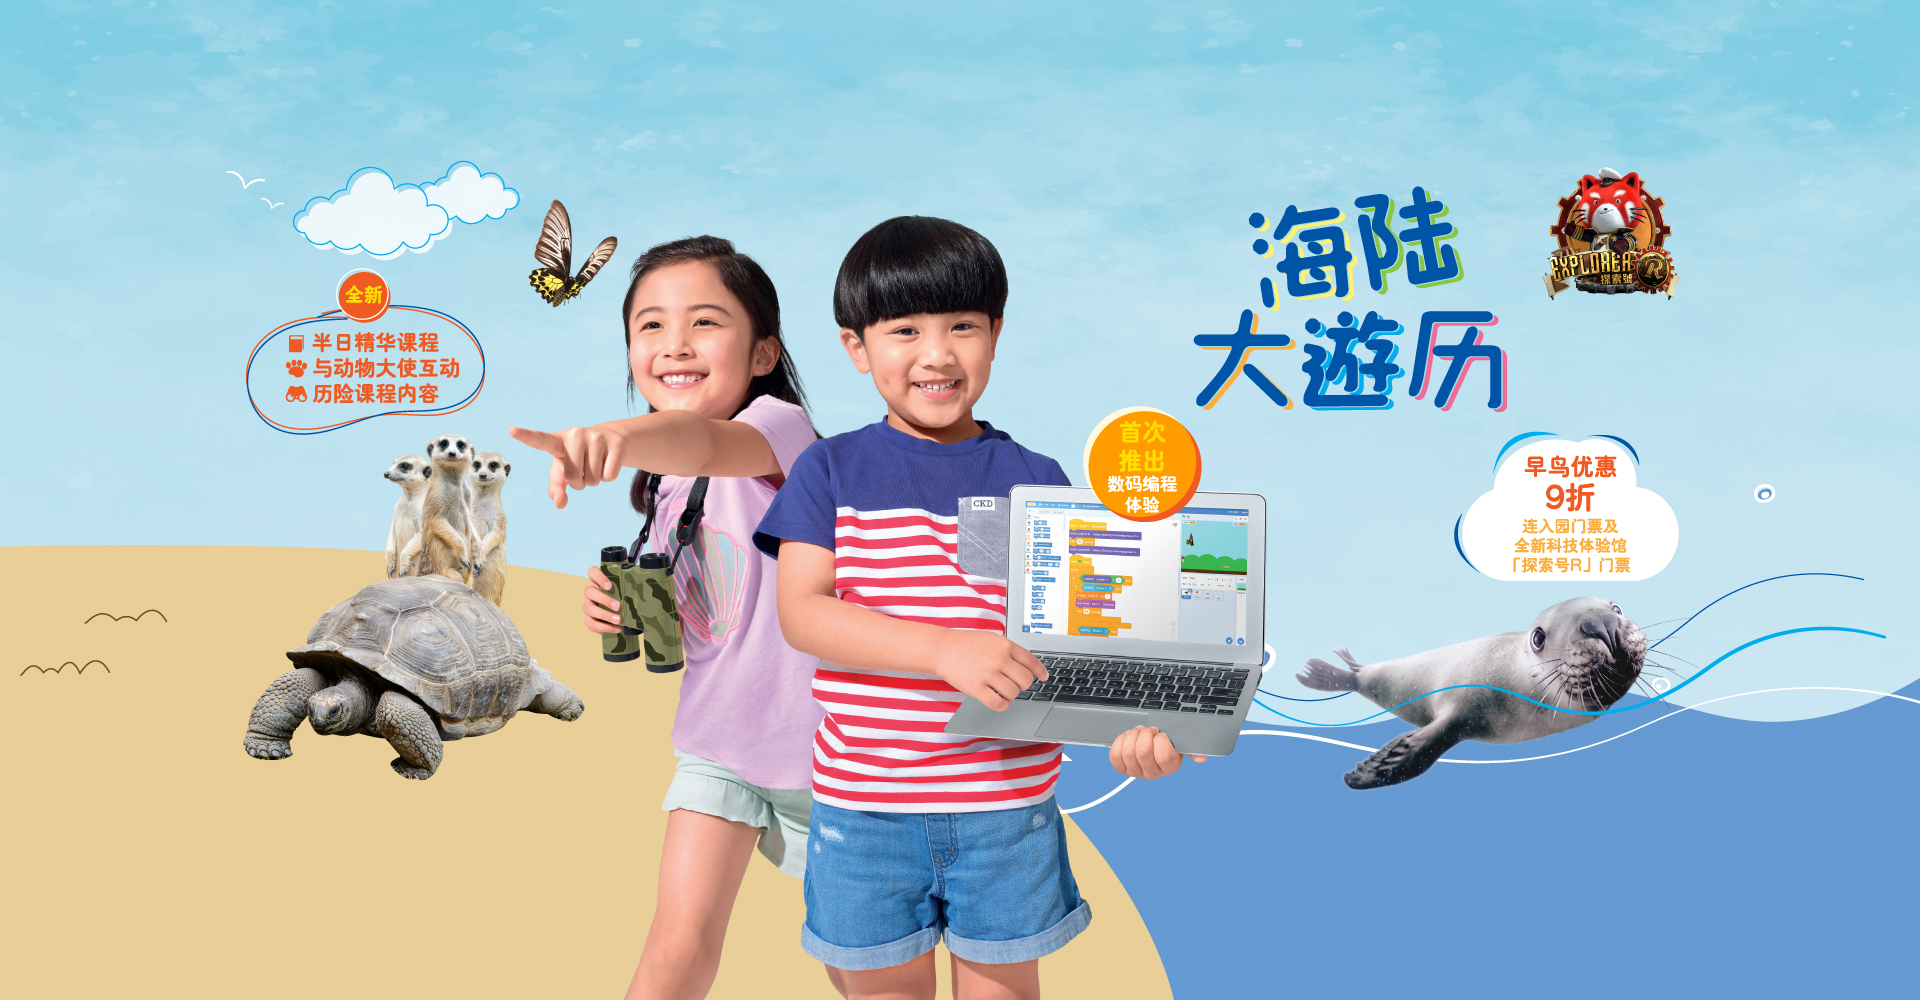 https://media.oceanpark.com.hk/files/s3fs-public/op-summercamp-inside-desktop-sc.jpg